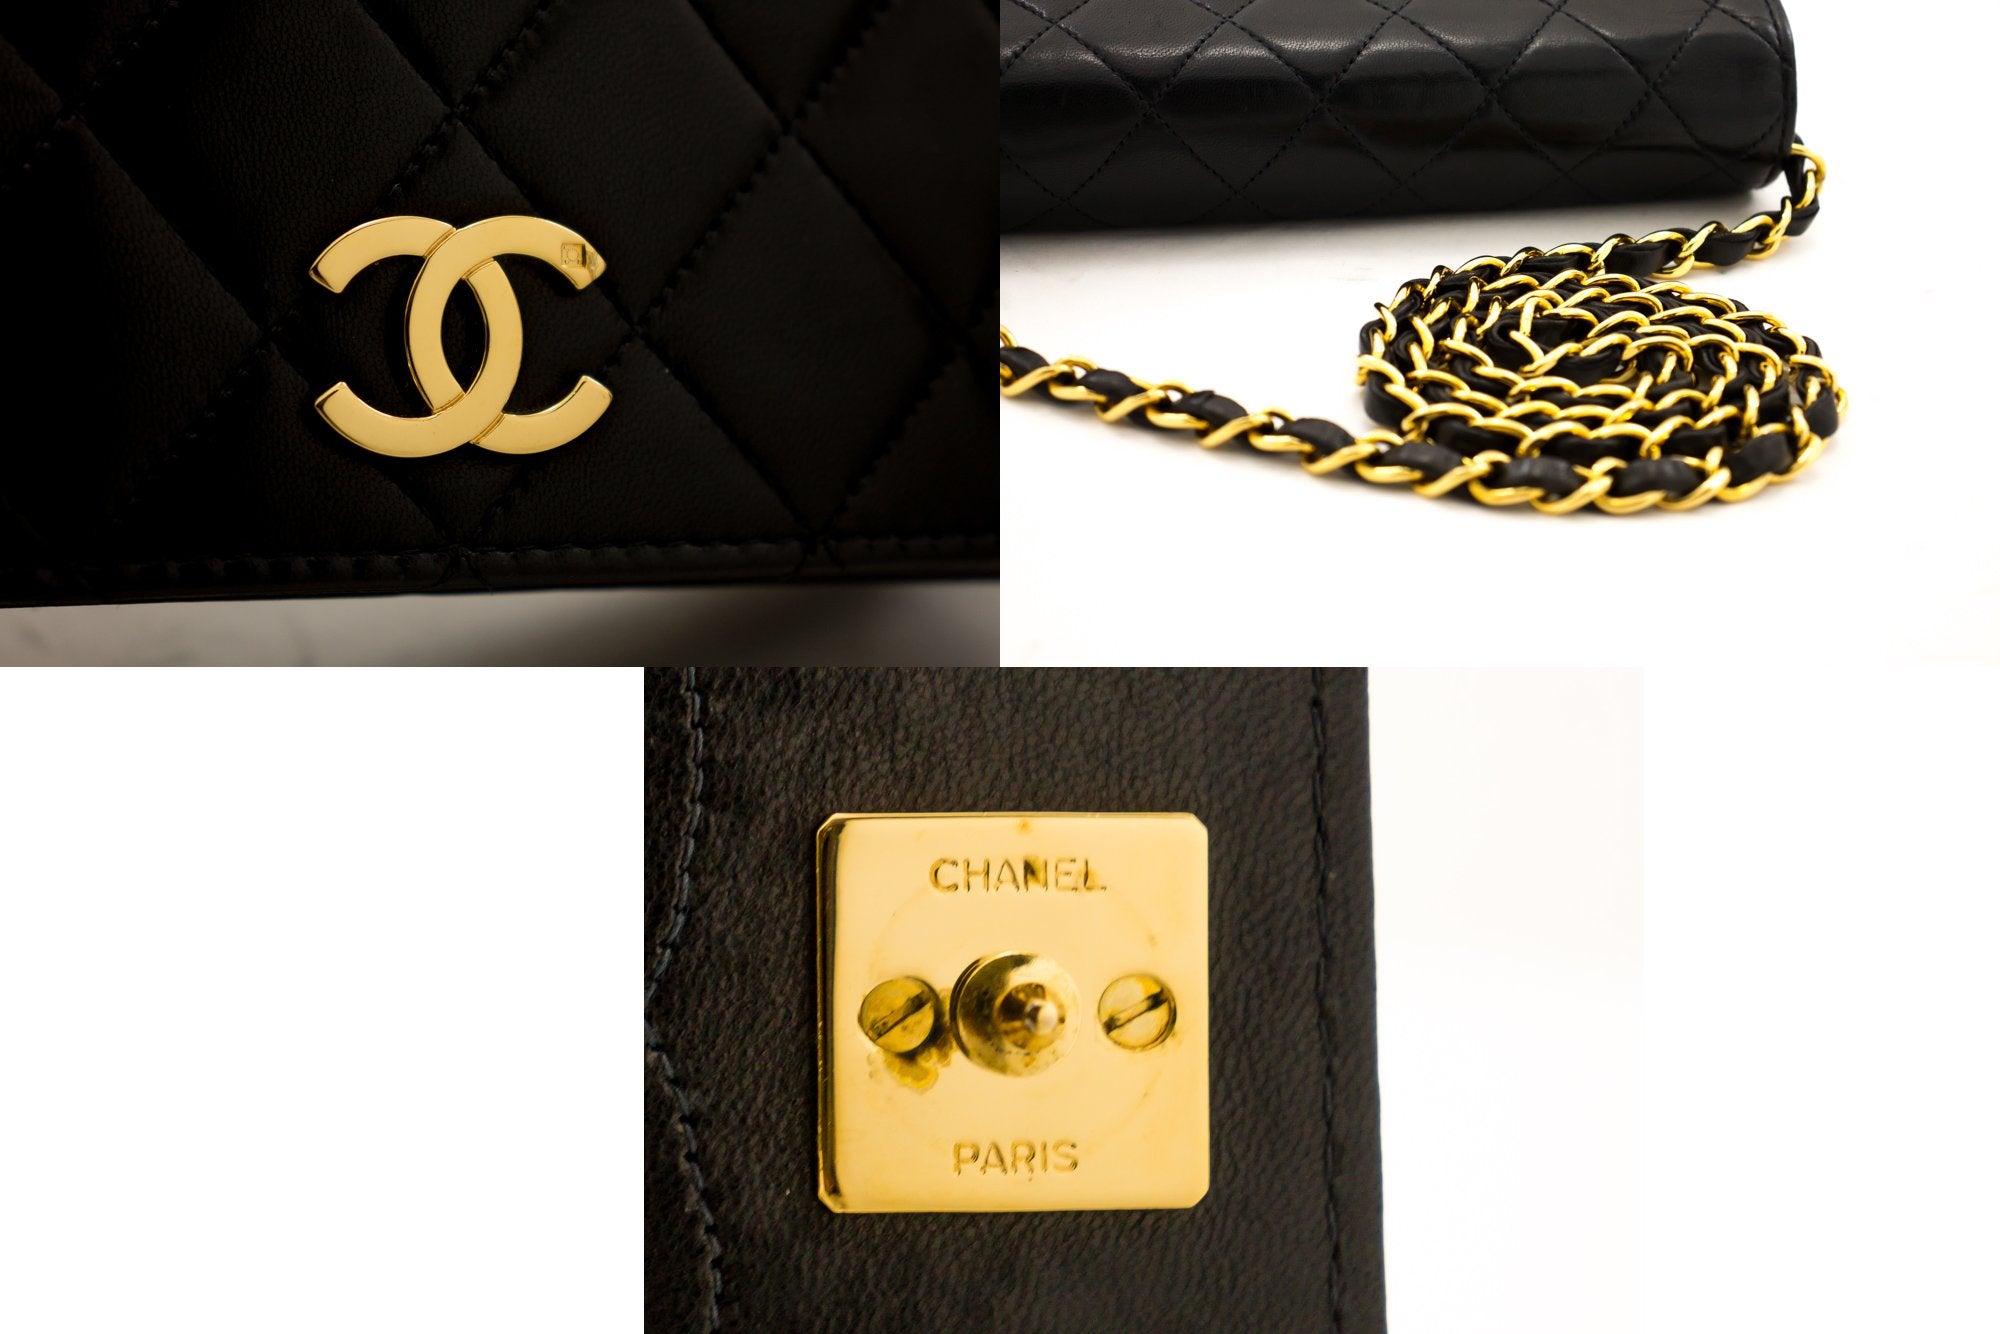 Chanel Pre-owned 1992 Jumbo Mademoiselle Classic Flap Shoulder Bag - Black